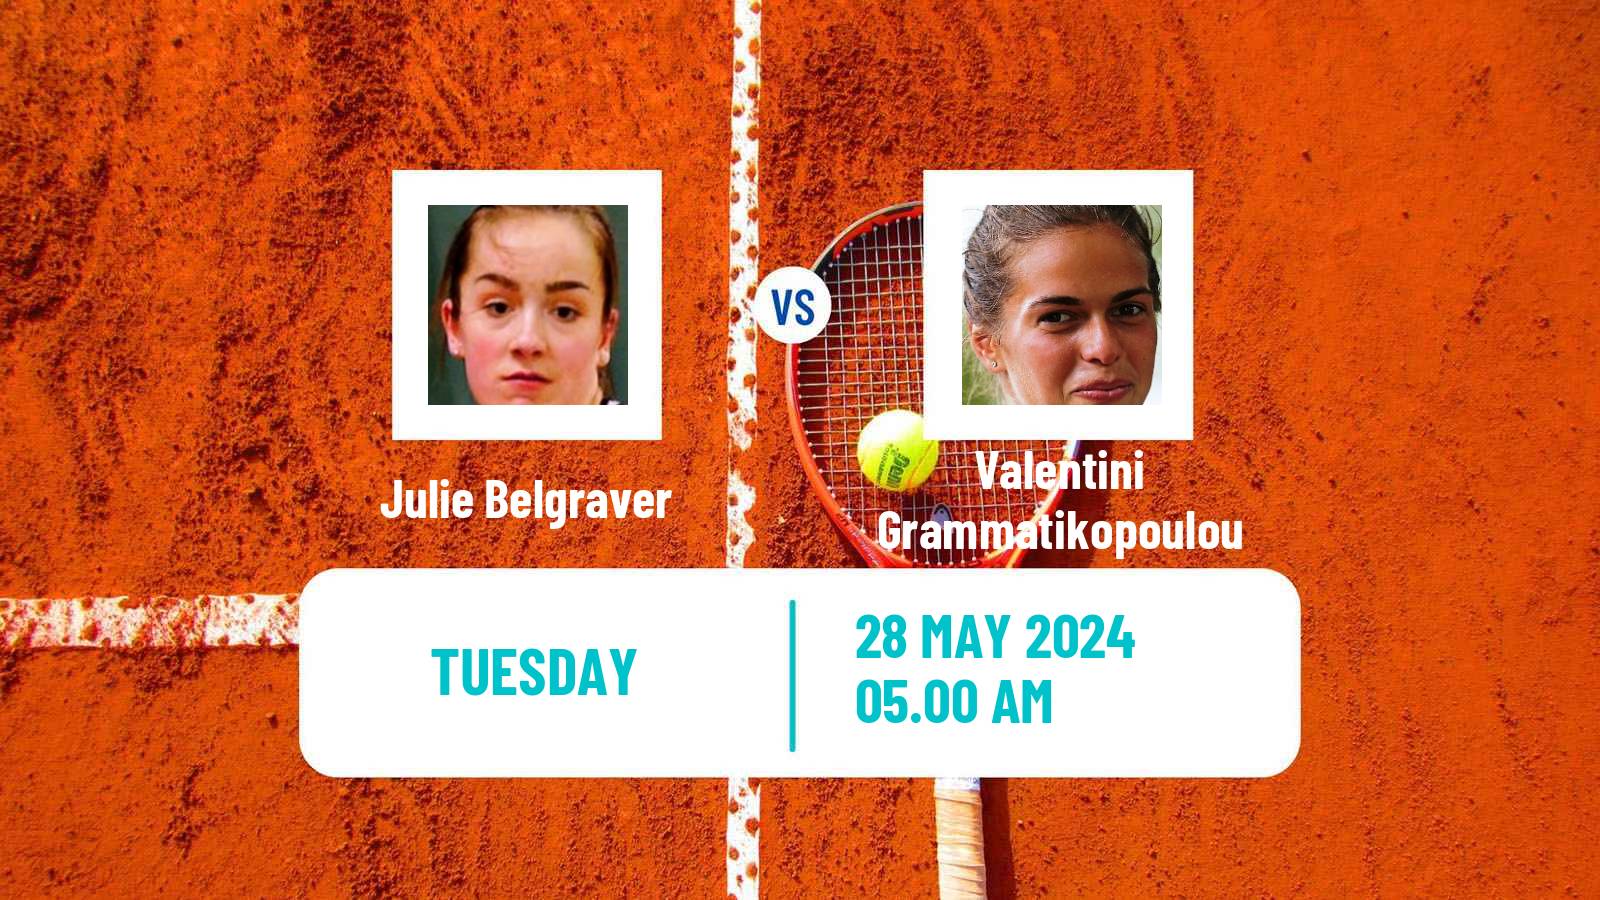 Tennis ITF W35 Klagenfurt Women Julie Belgraver - Valentini Grammatikopoulou